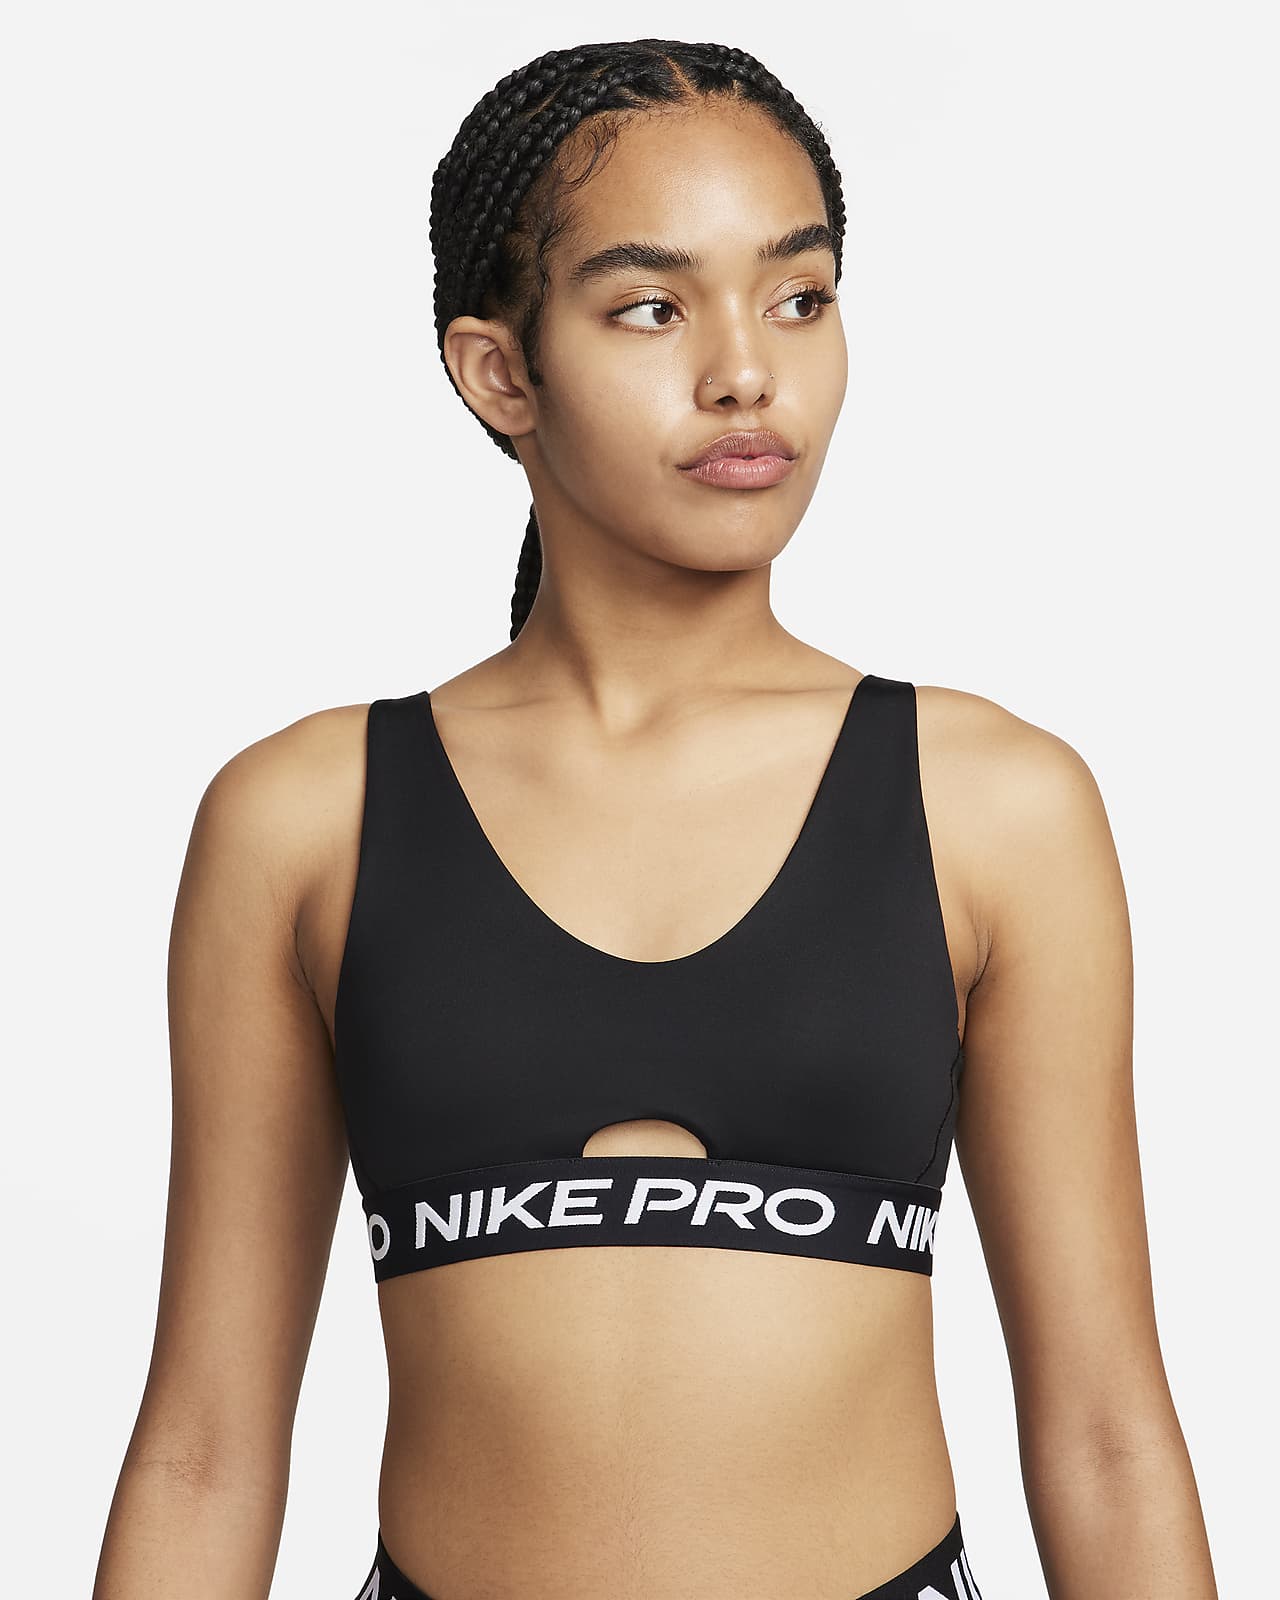 Nike Swoosh Front Zip Women's Medium-Support Padded Sports Bra. Nike CH